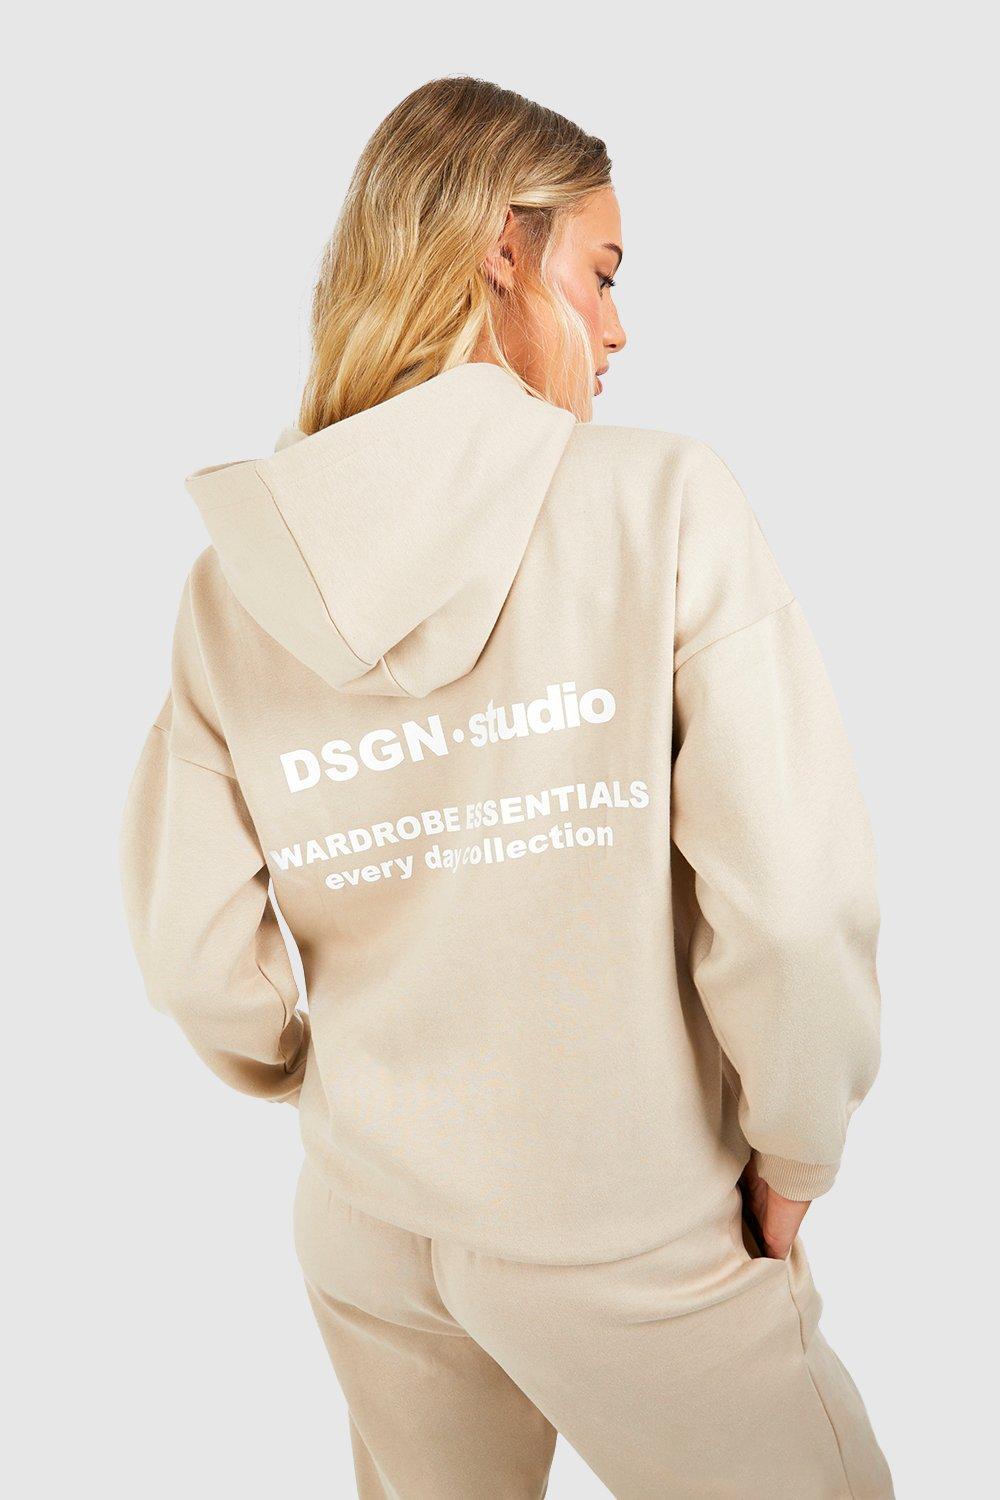 https://media.boohoo.com/i/boohoo/gzz70355_stone_xl_3/female-stone-dsgn-studio-wardrobe-essentials-slogan-hooded-tracksuit